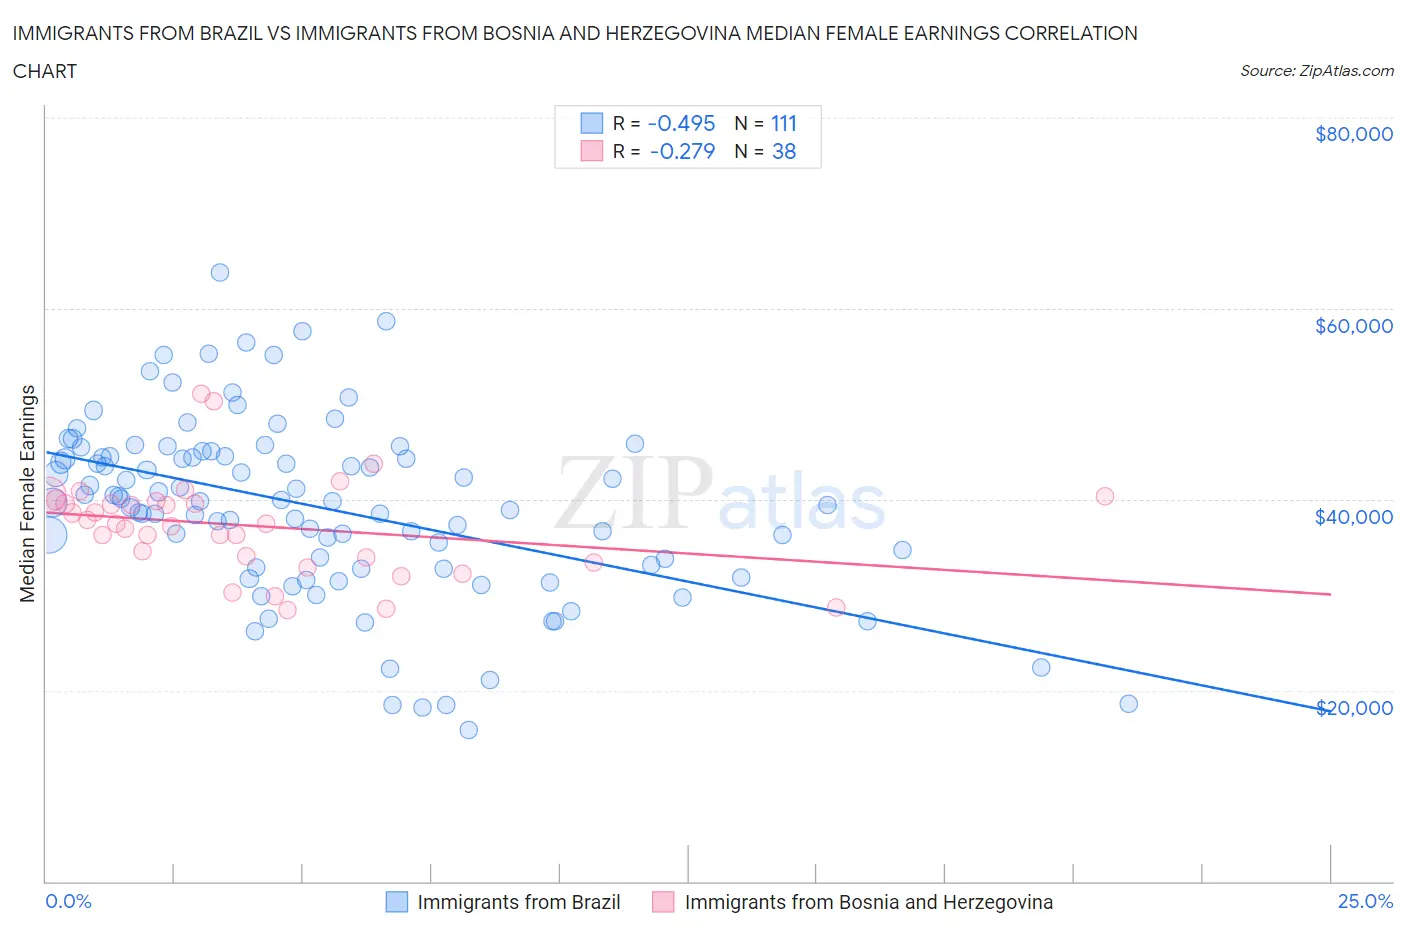 Immigrants from Brazil vs Immigrants from Bosnia and Herzegovina Median Female Earnings